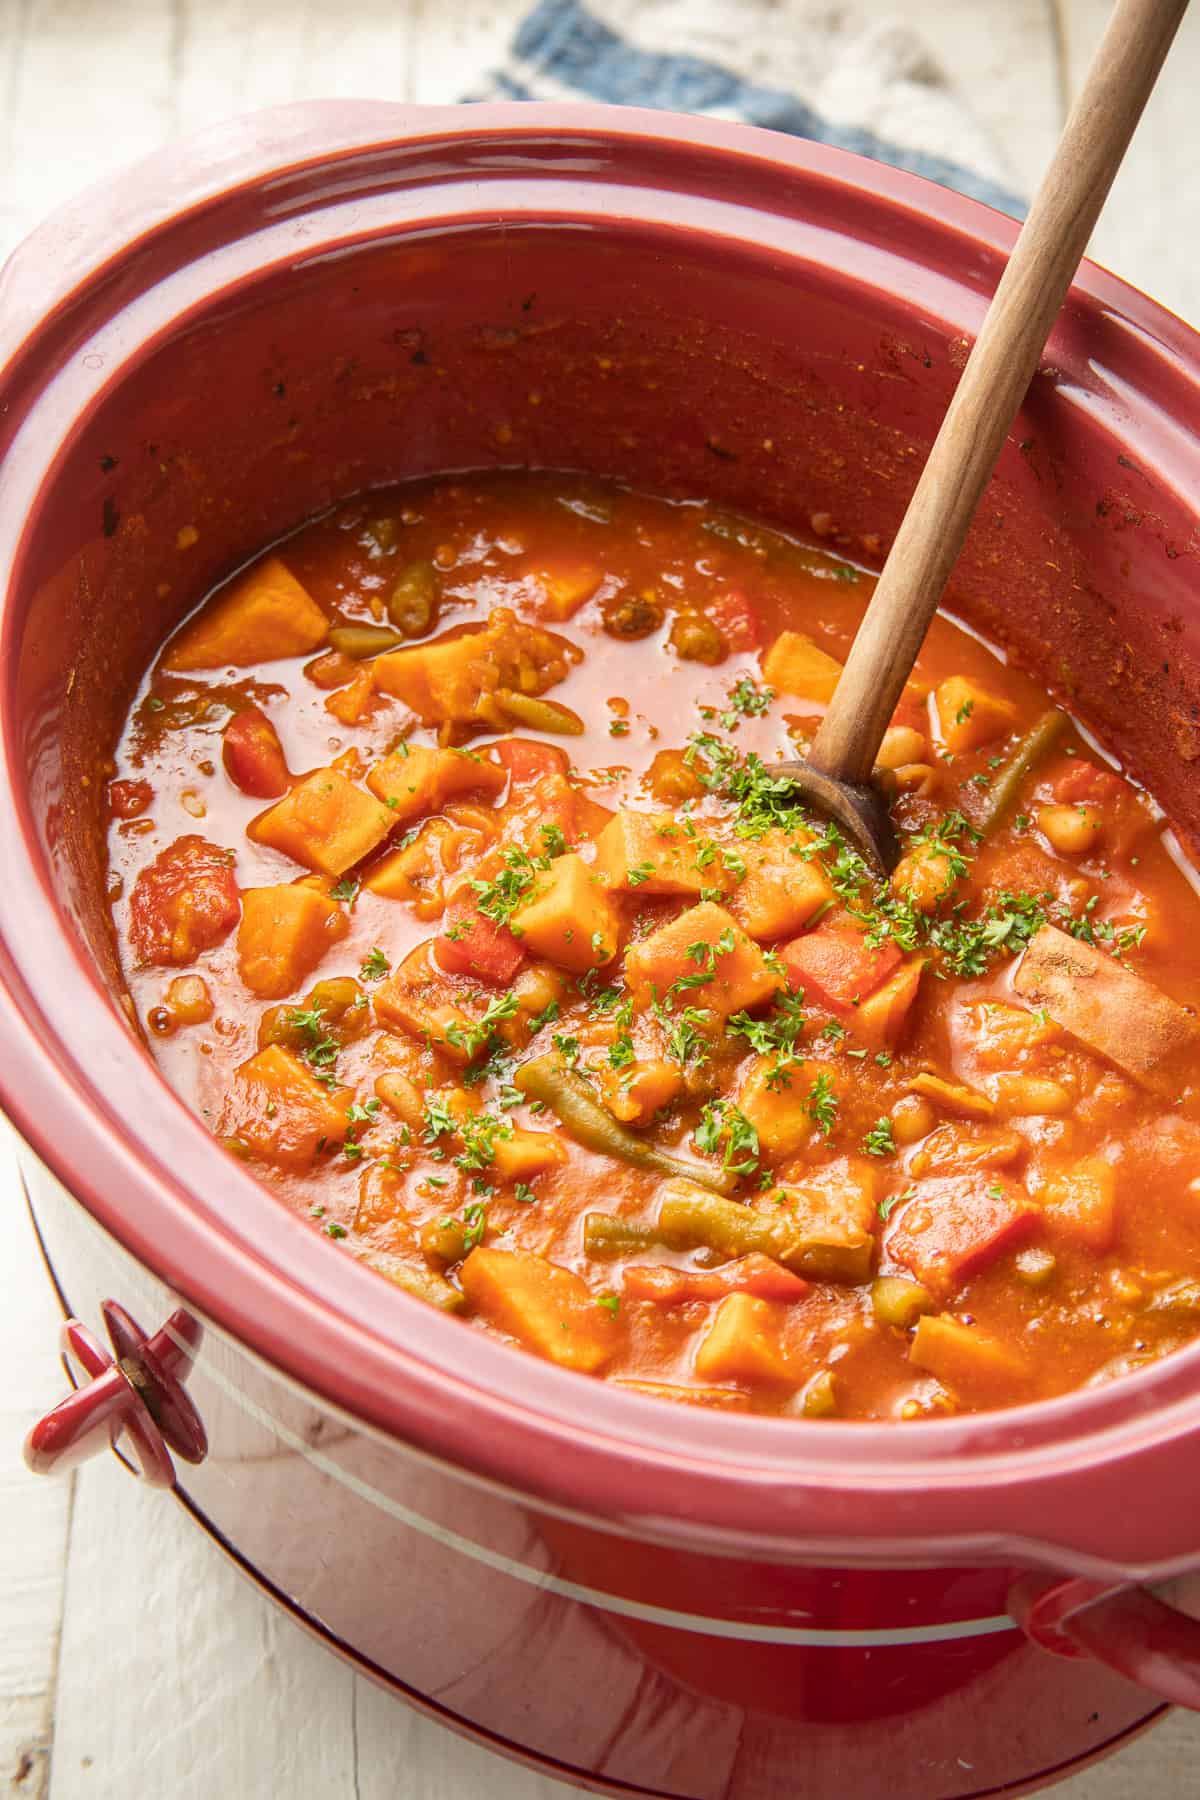 Crock pot filled with vegan stew.